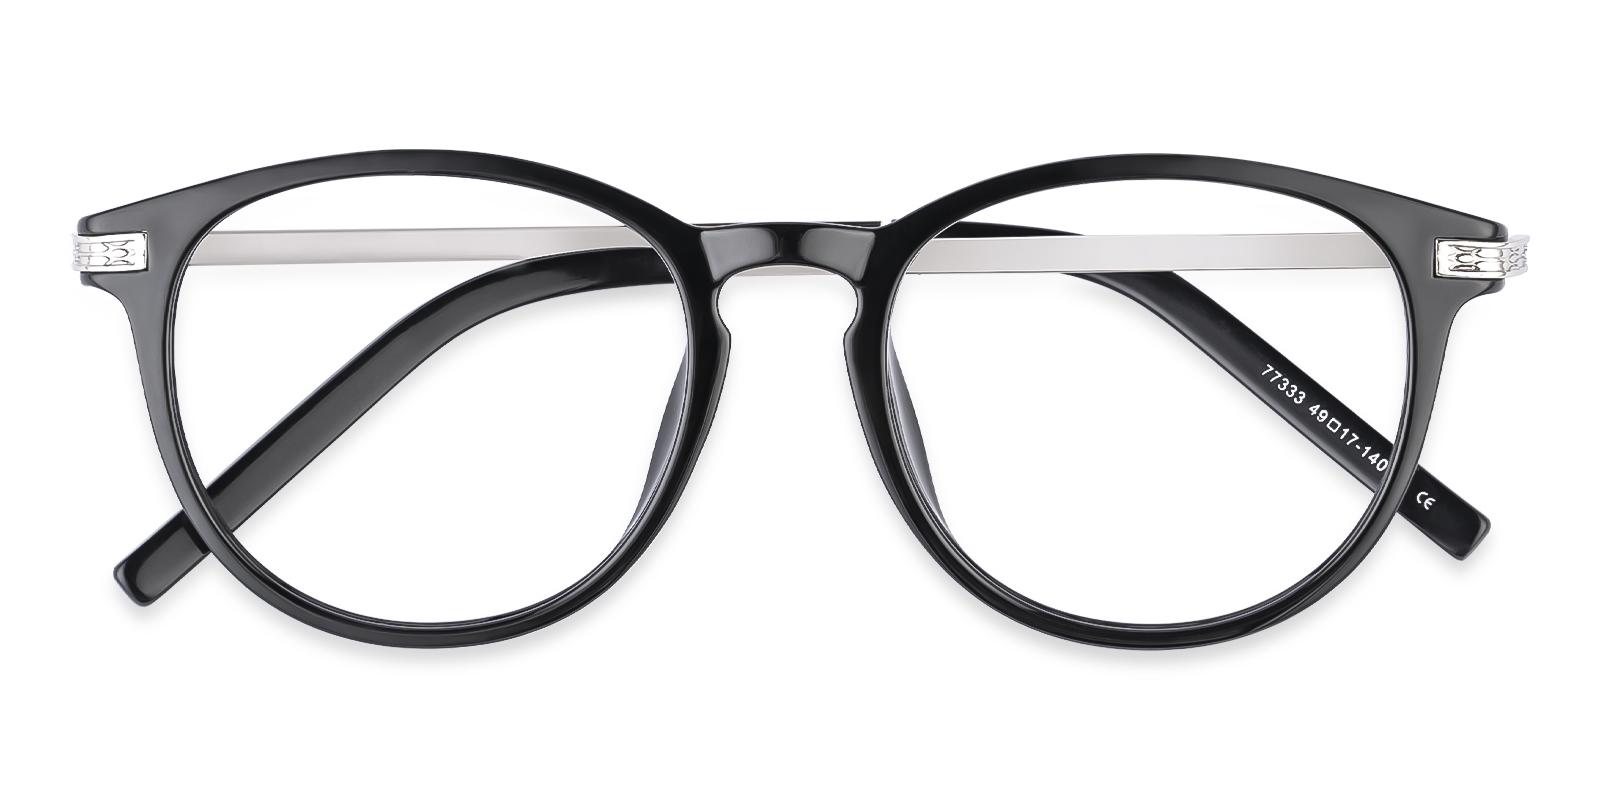 Callie Black Combination Eyeglasses , UniversalBridgeFit Frames from ABBE Glasses